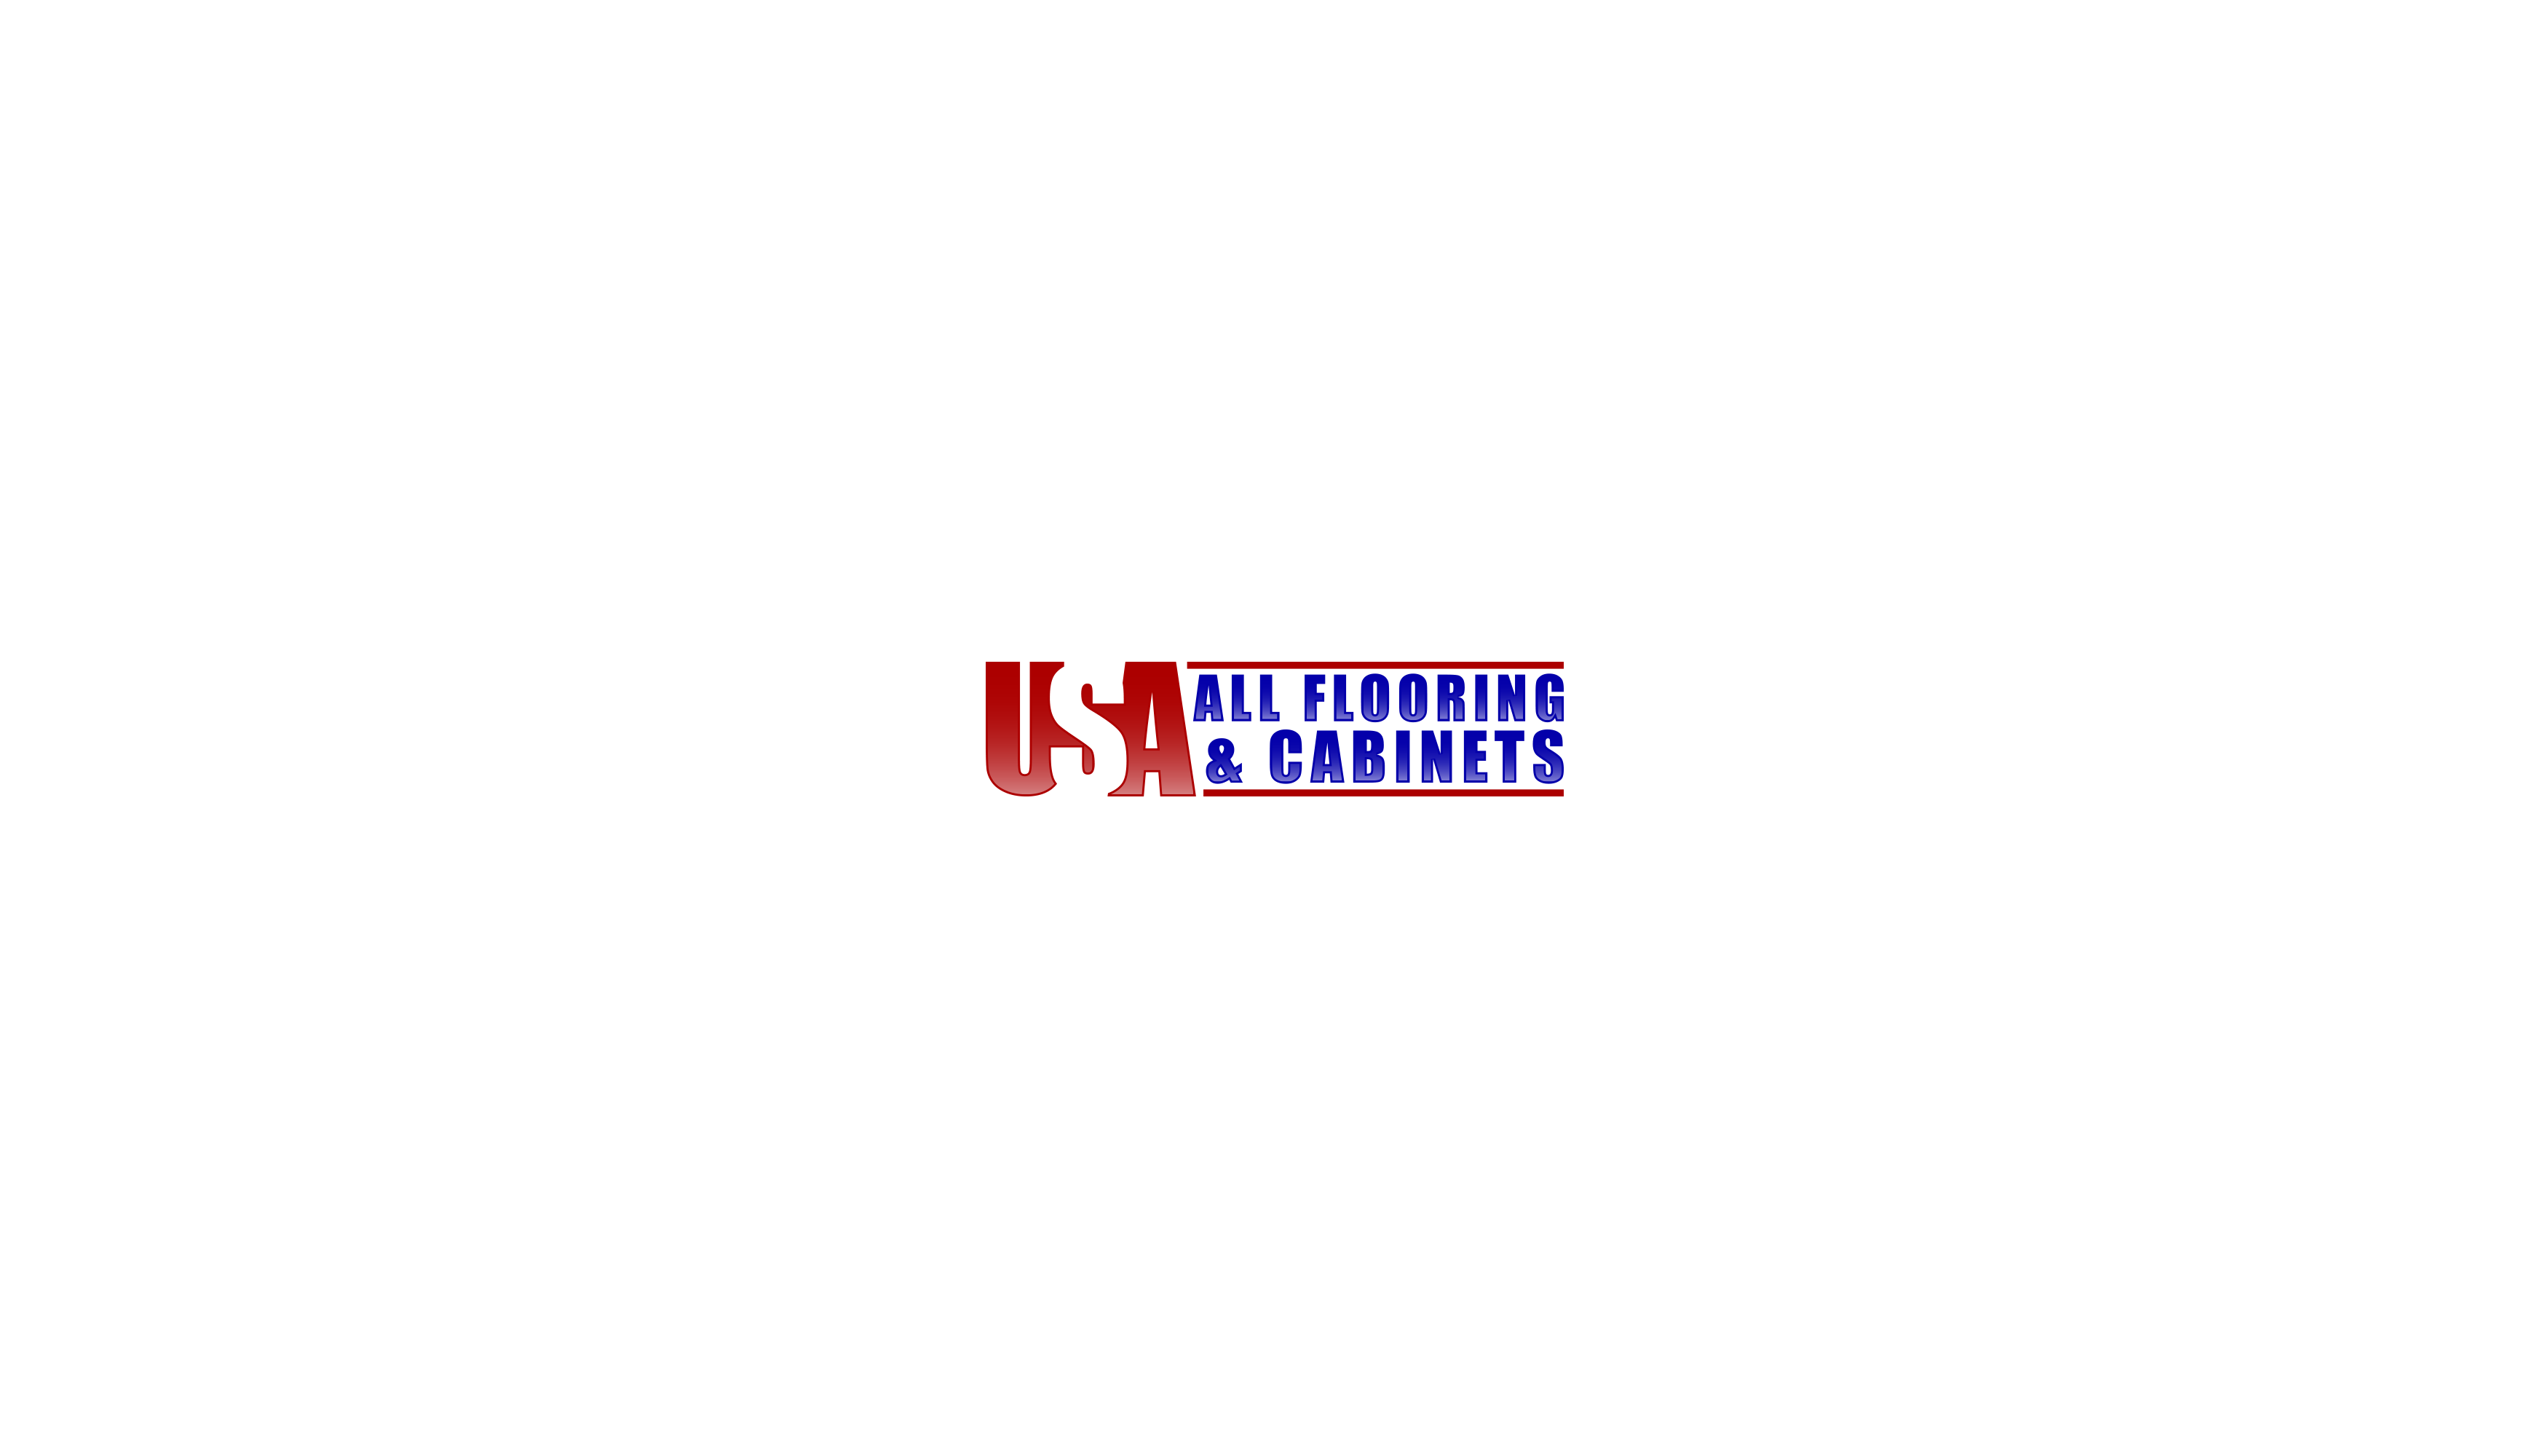 All Flooring USA & Cabinets Design #9